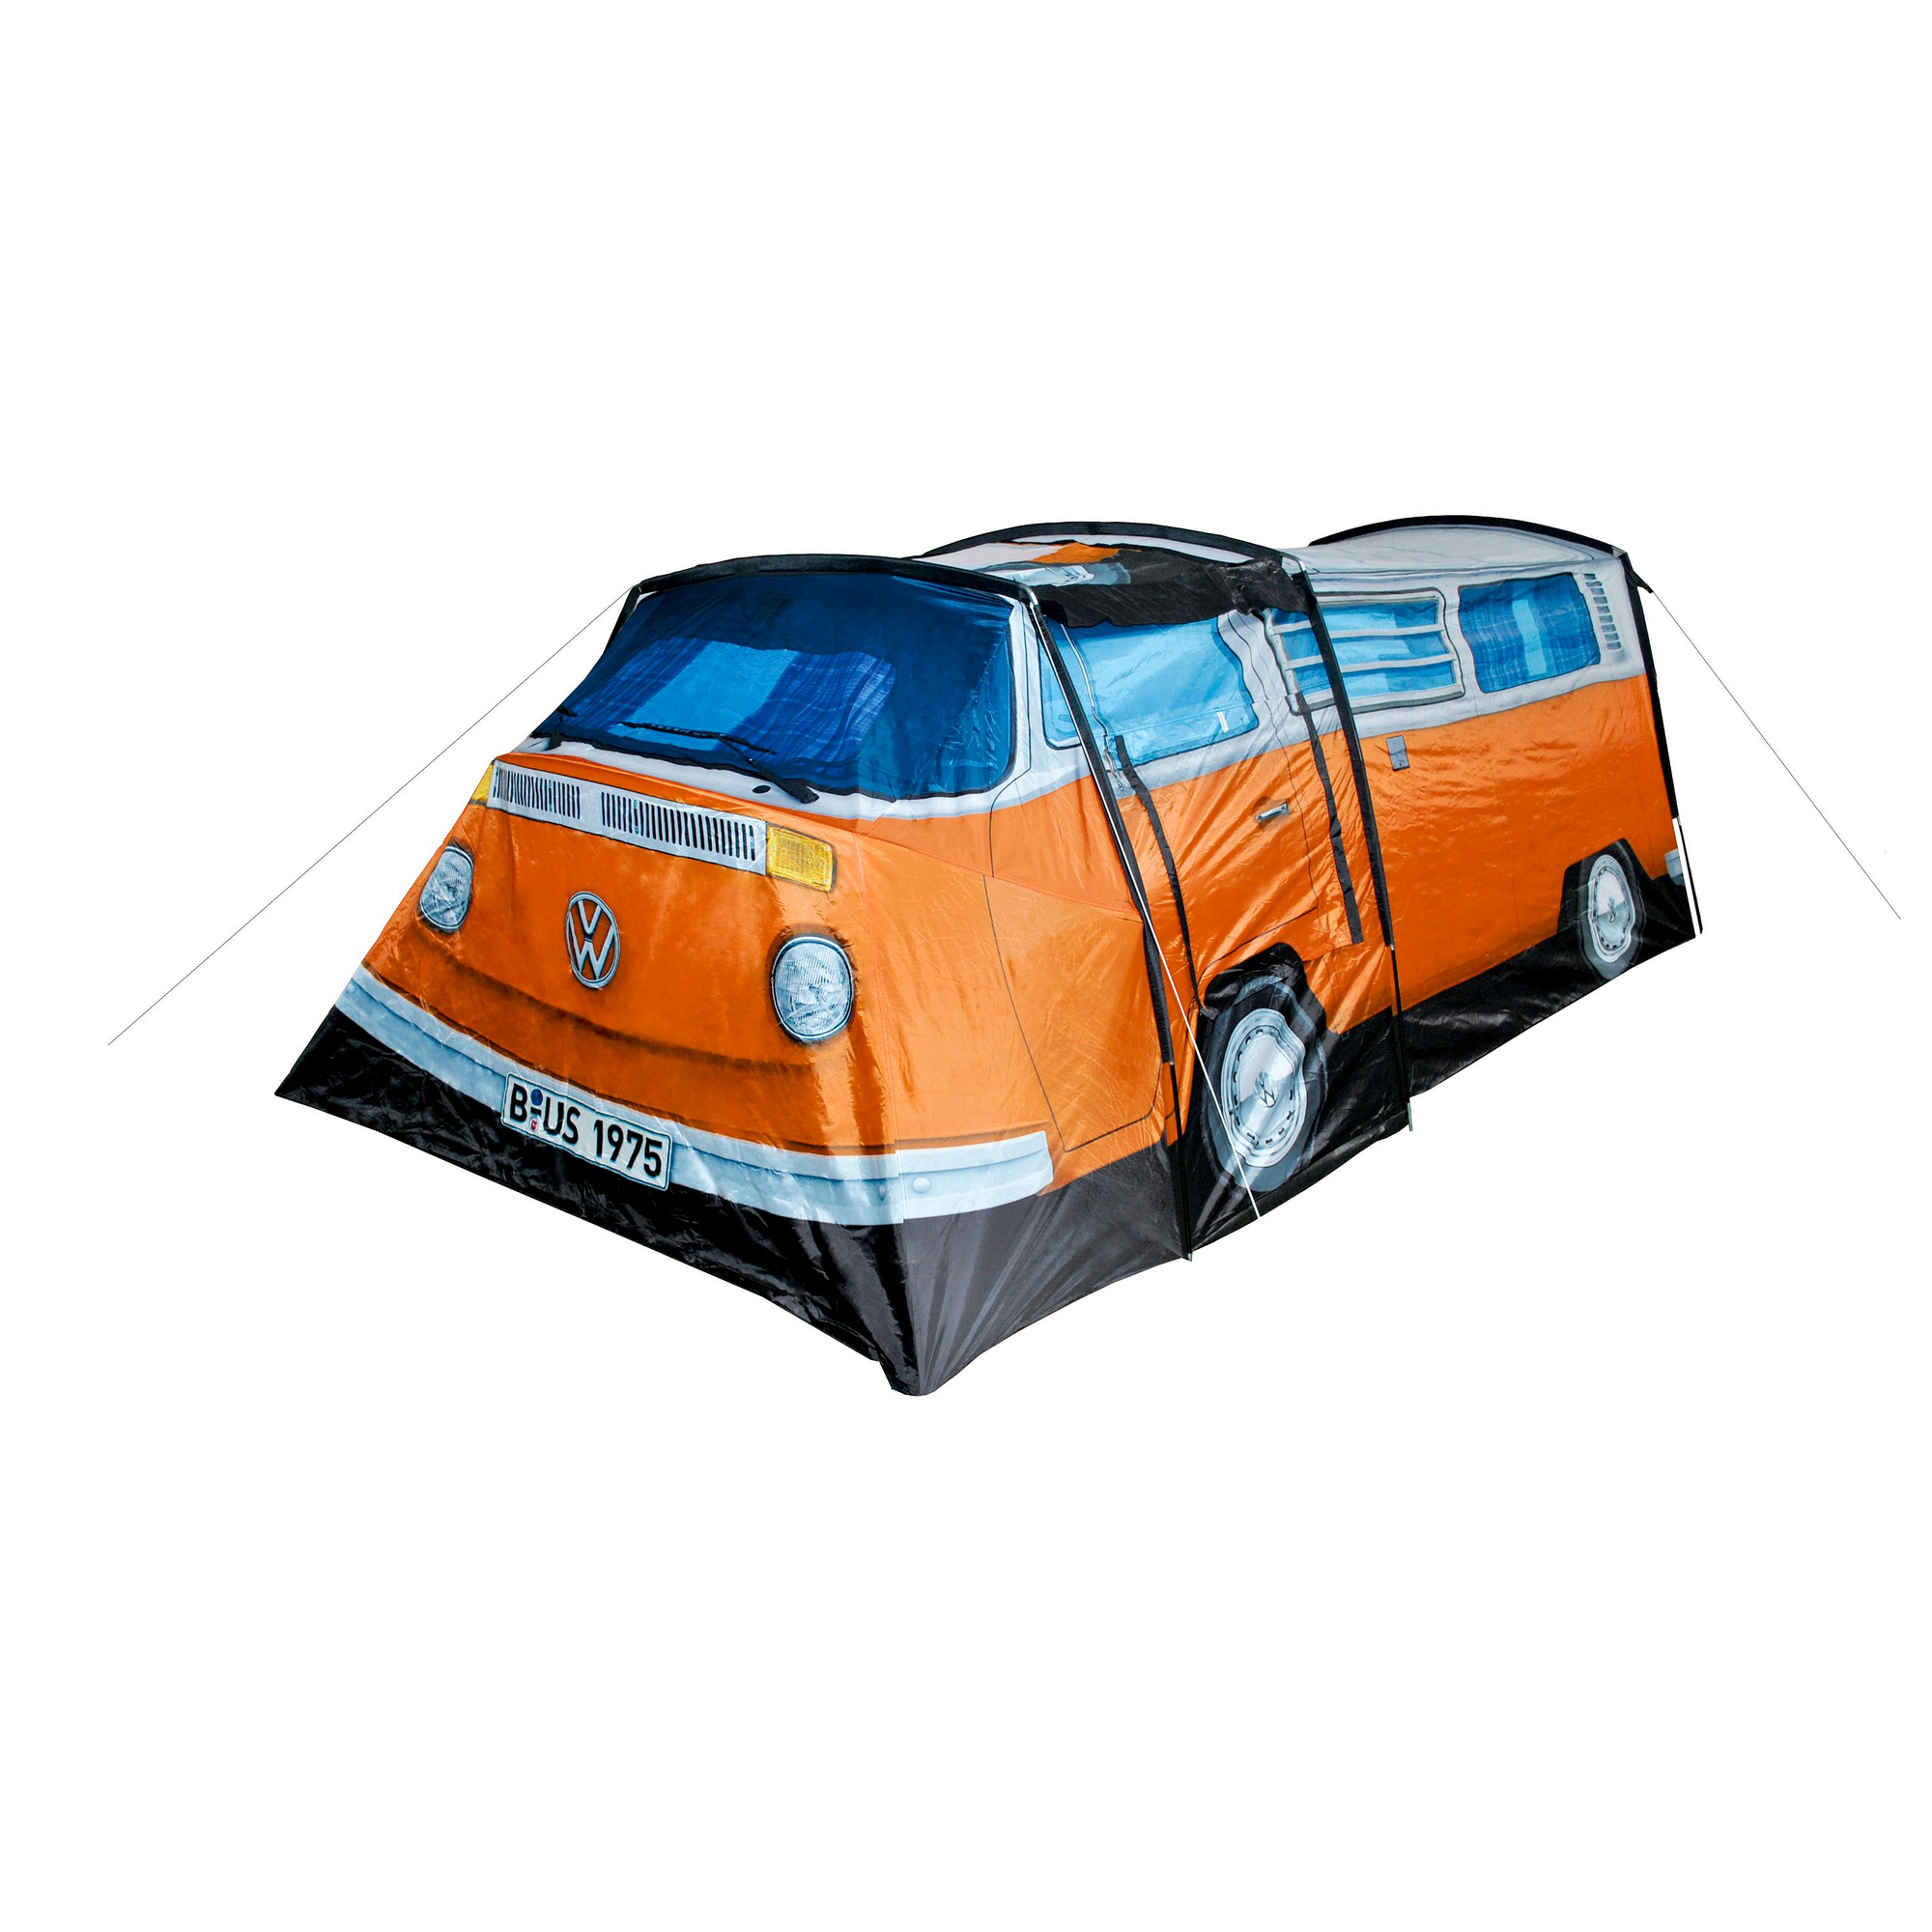 Zelt 'Volkswagen Bulli' für 3 Personen 380 x 200 x 145 cm + product picture